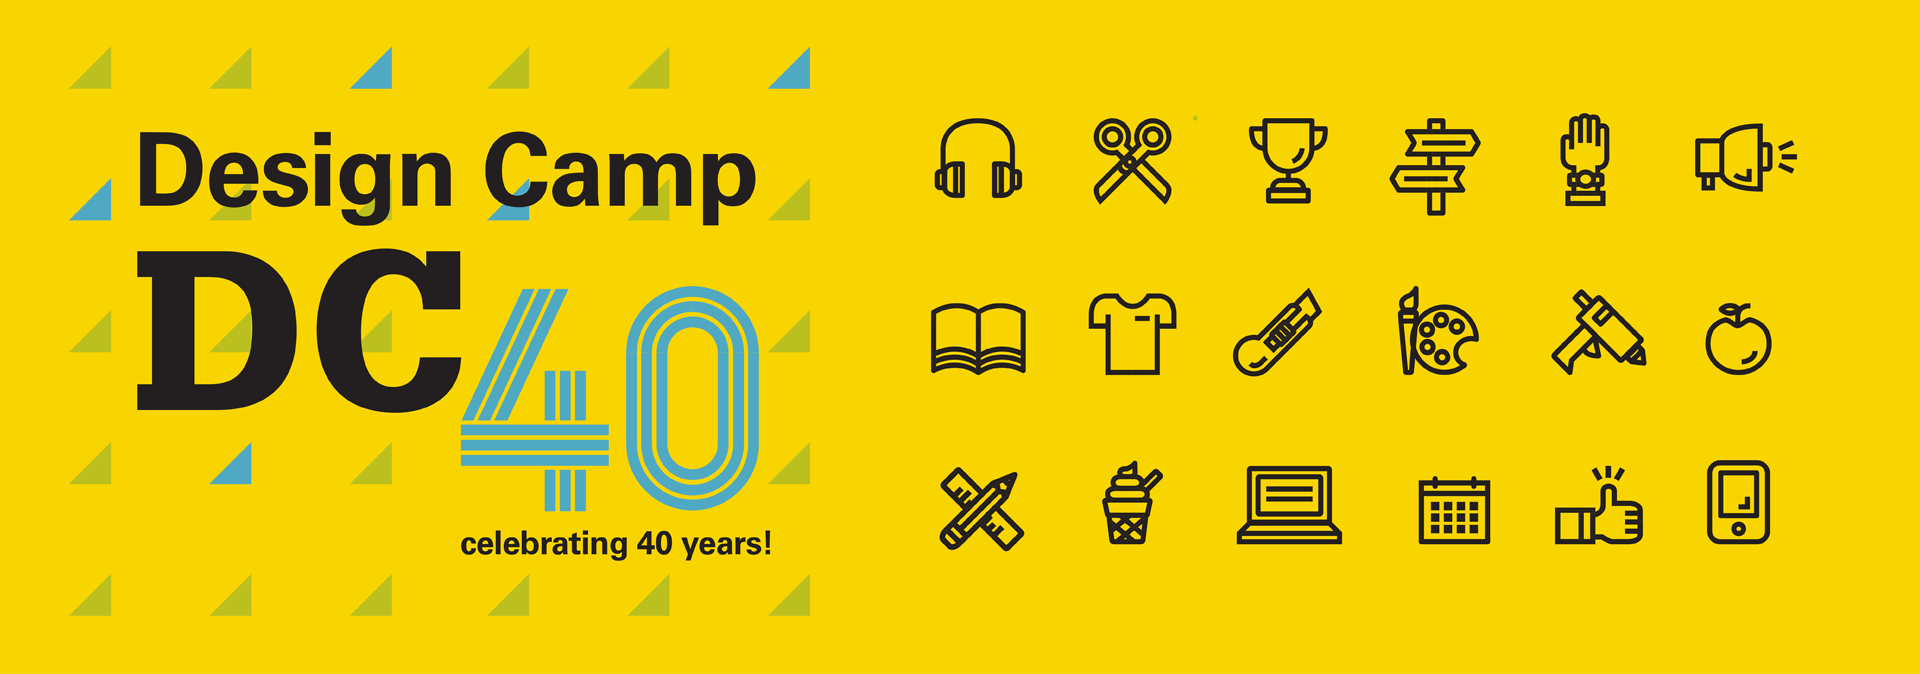 Design camp 40th anniversary banner